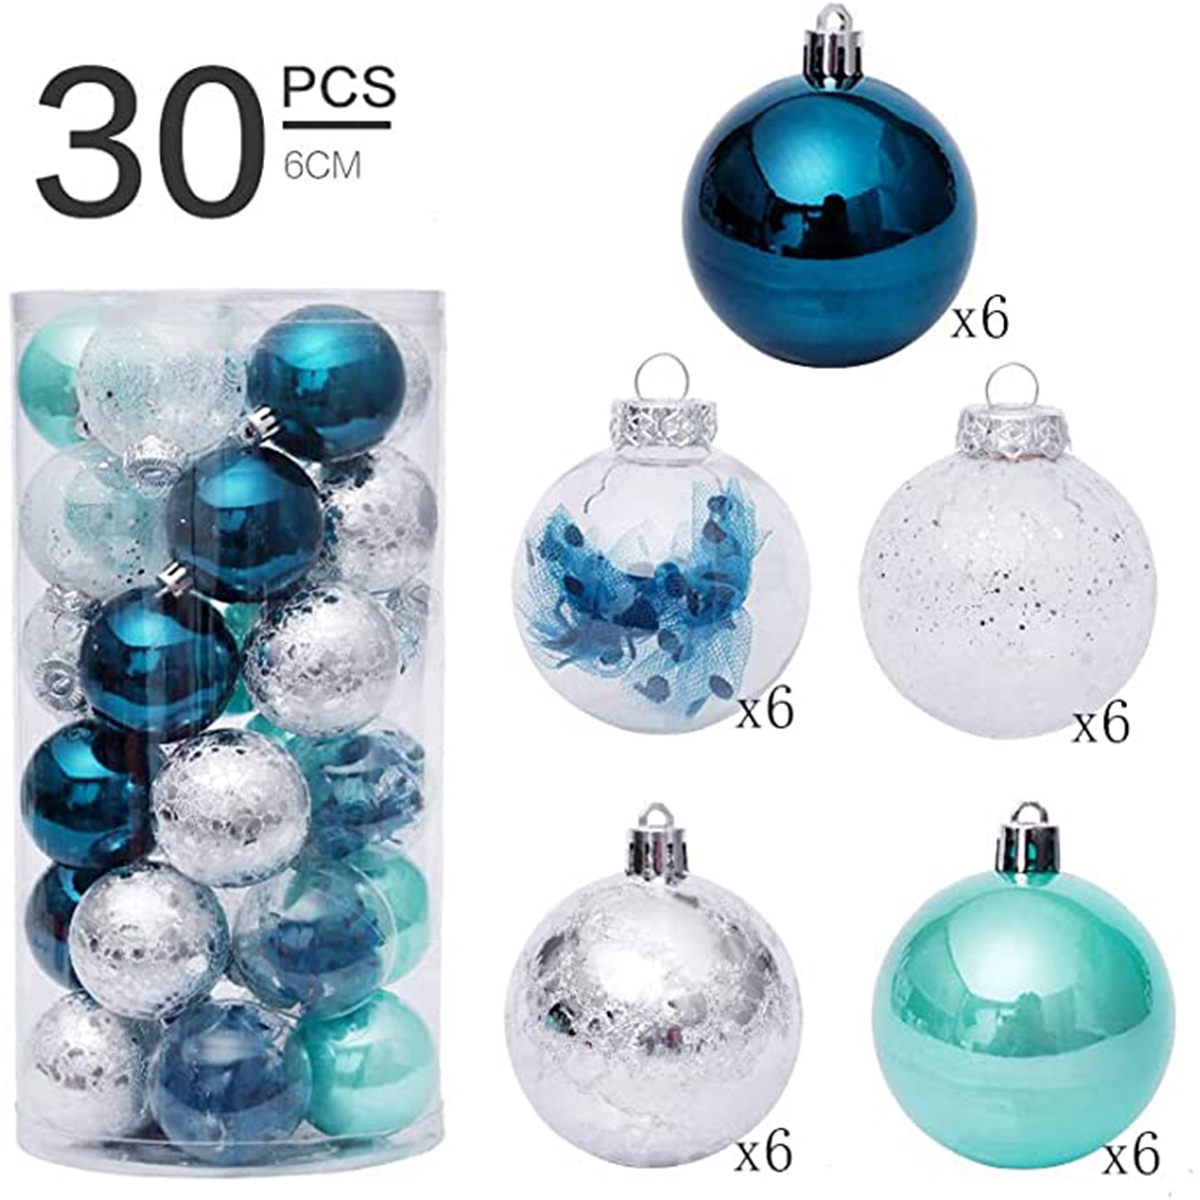 30 Pcs Painting Shatterproof Christmas Ball 6CM,Royal/Blue/Silver